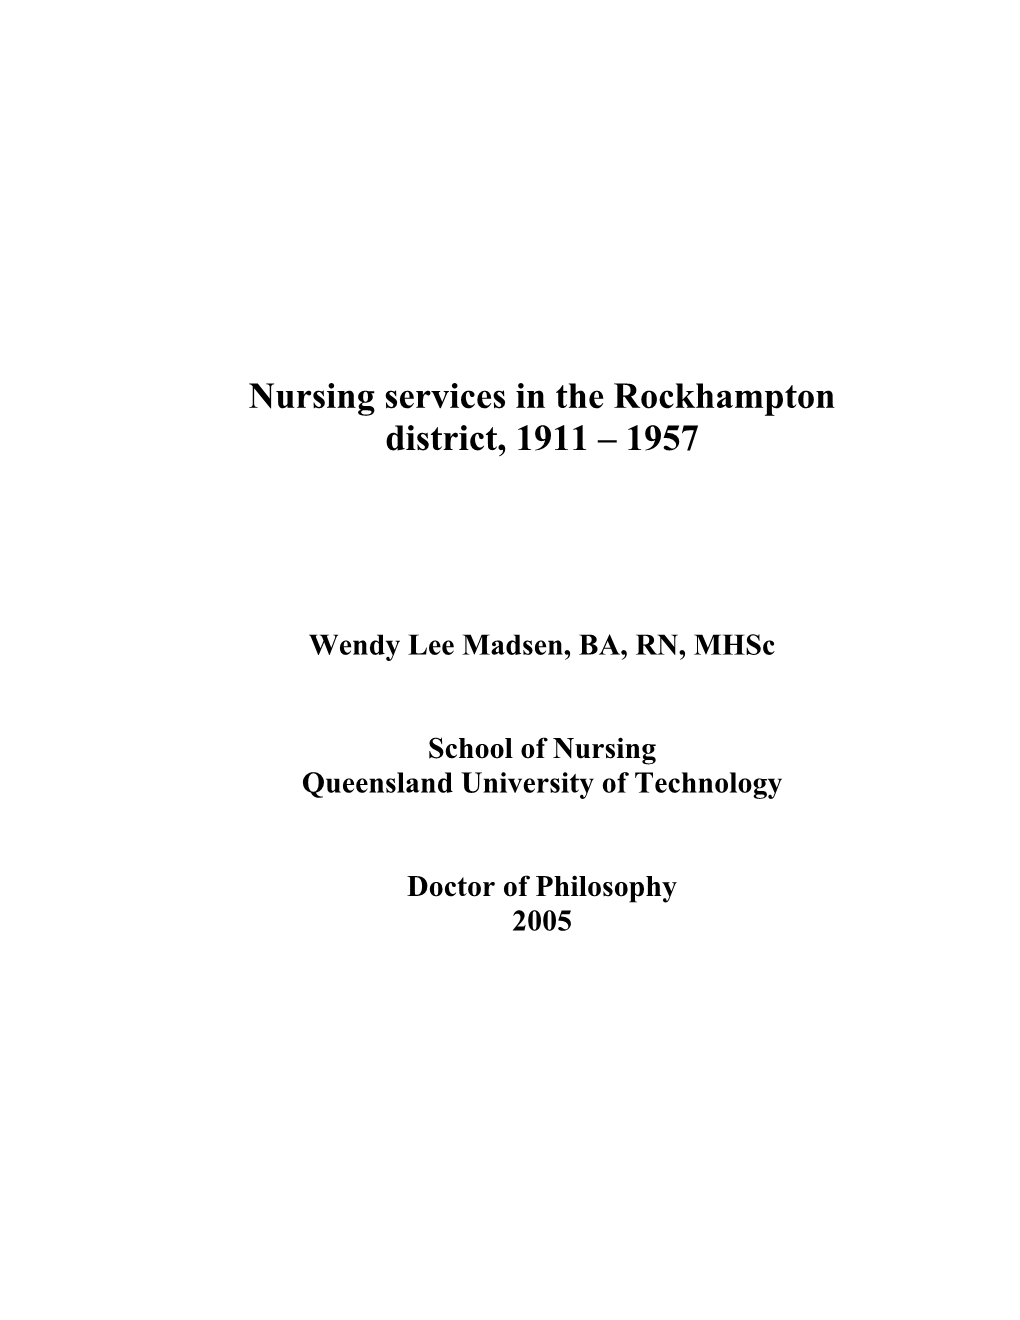 Nursing Services in the Rockhampton District, 1911 – 1957